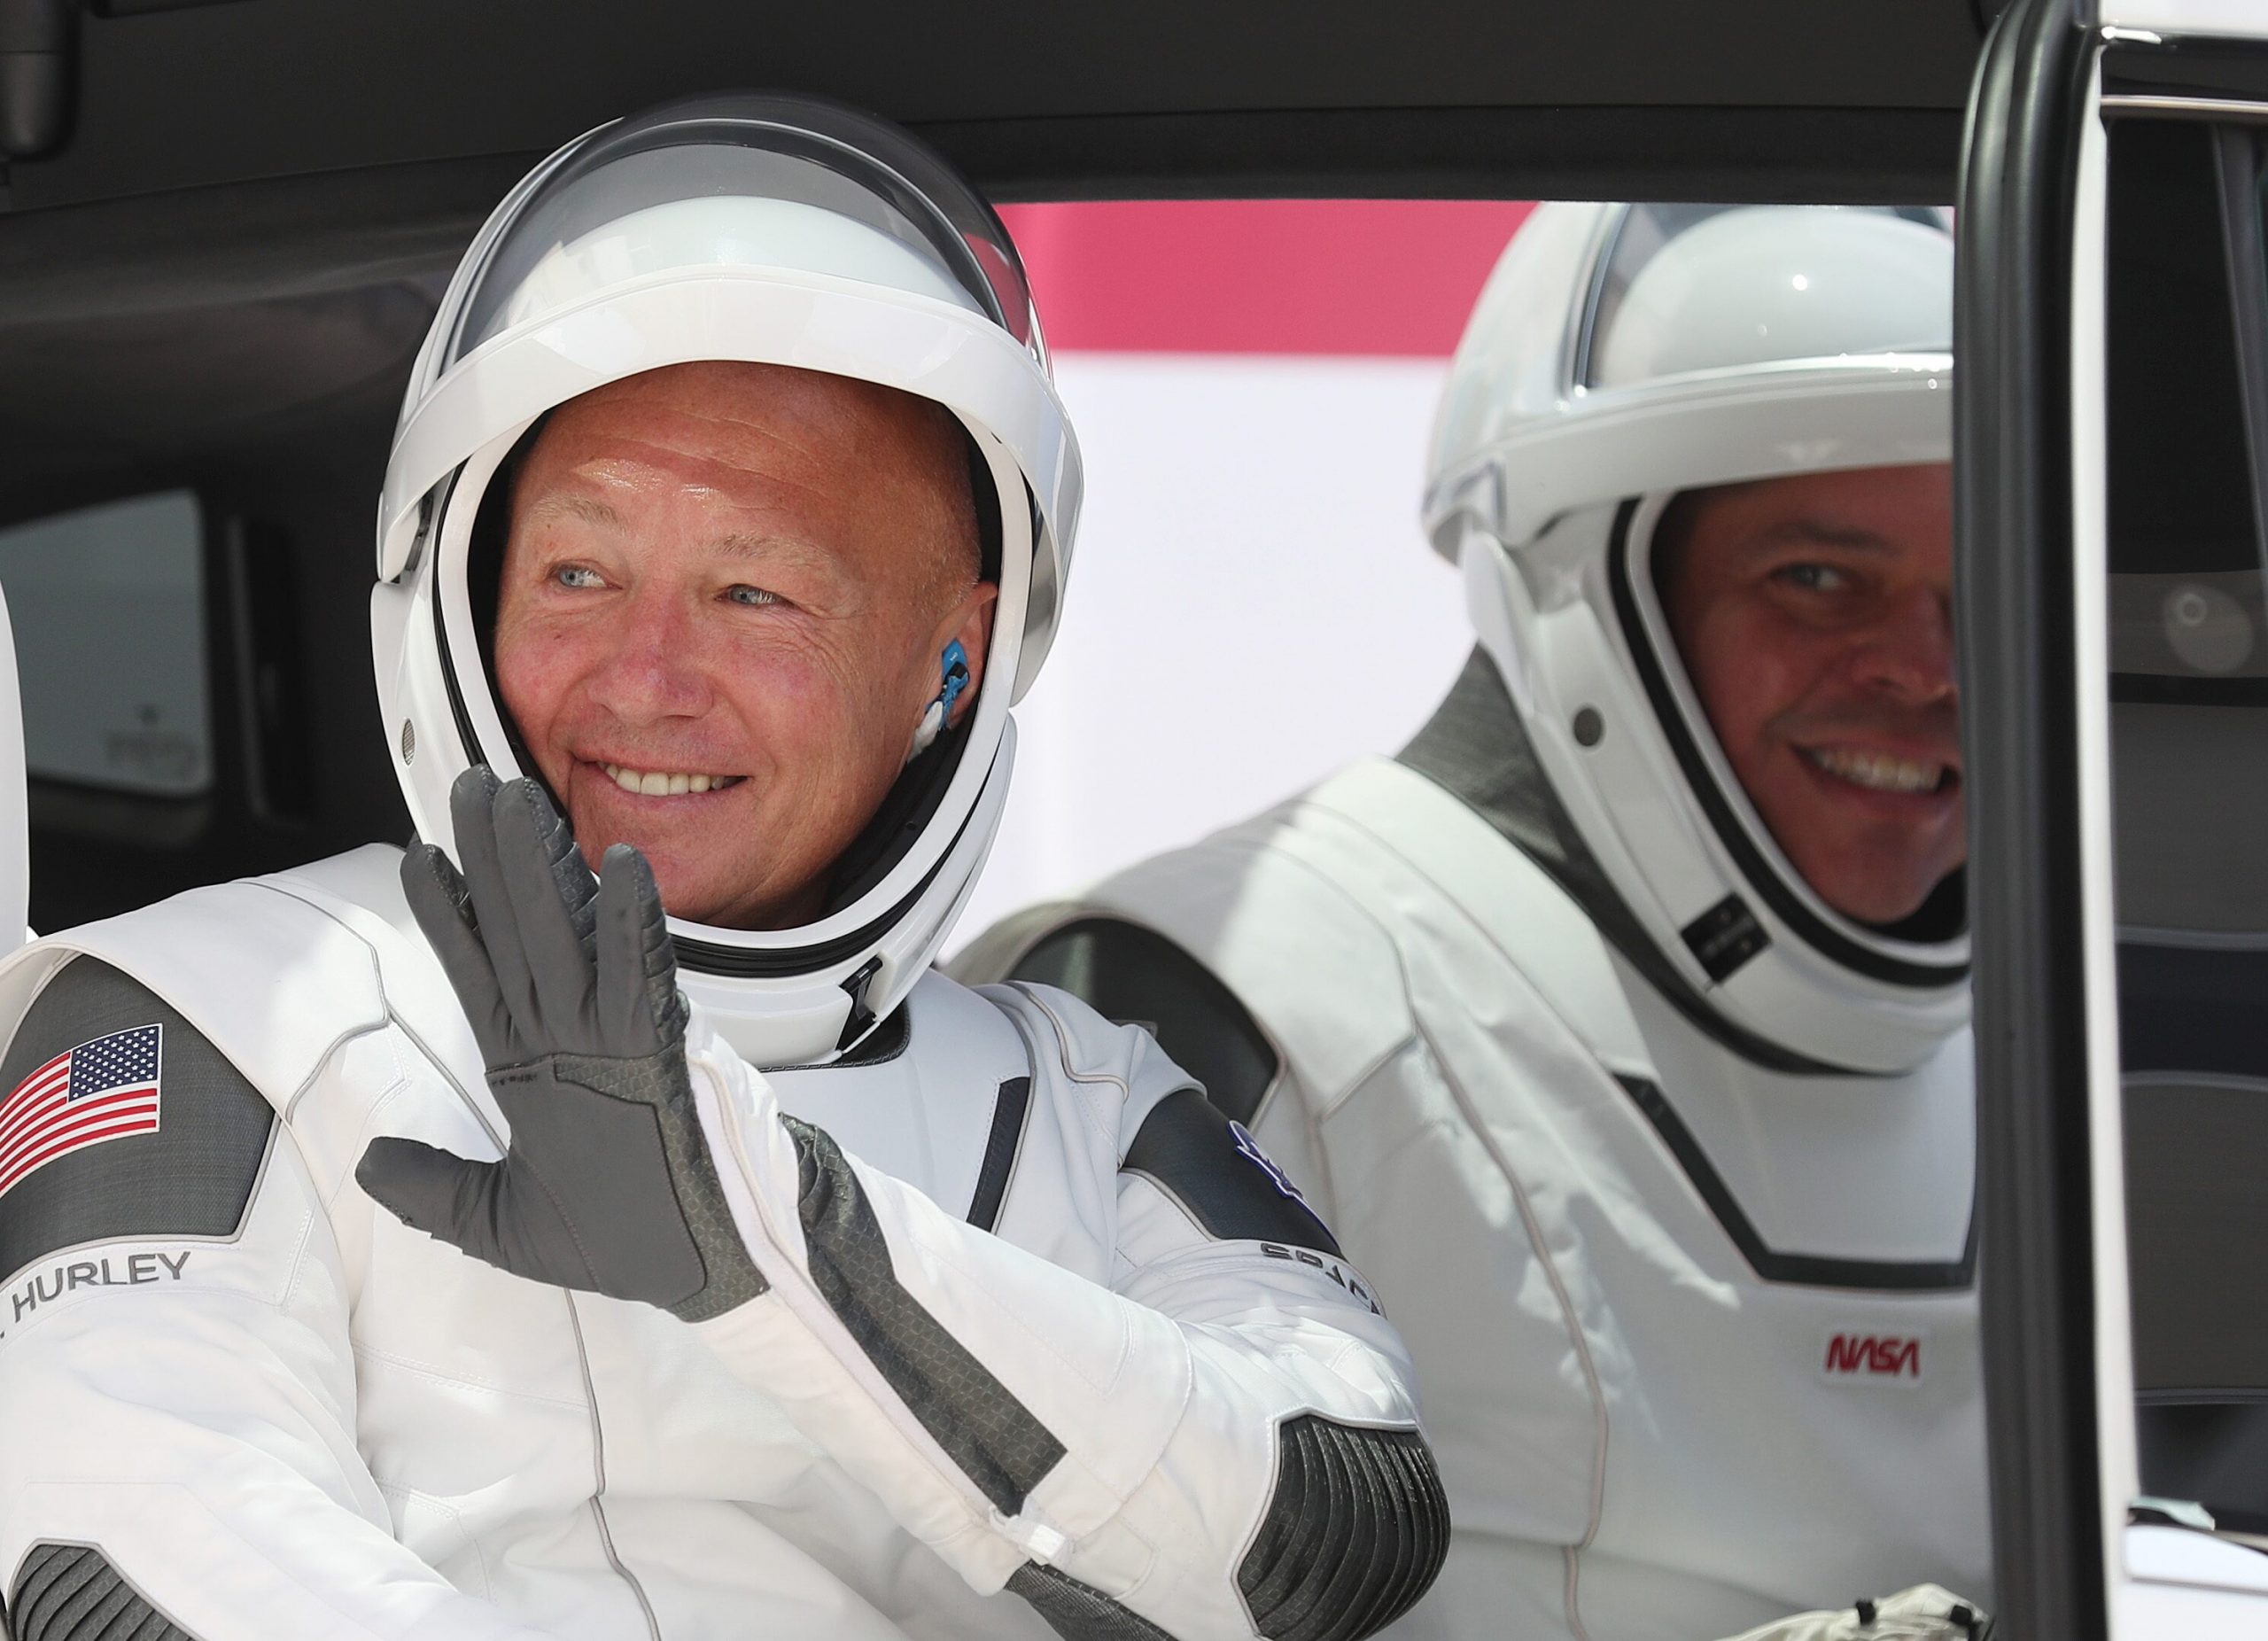 NASA astronauts Doug Hurley and Bob Behnken prepare for historic return to Earth in SpaceX capsule